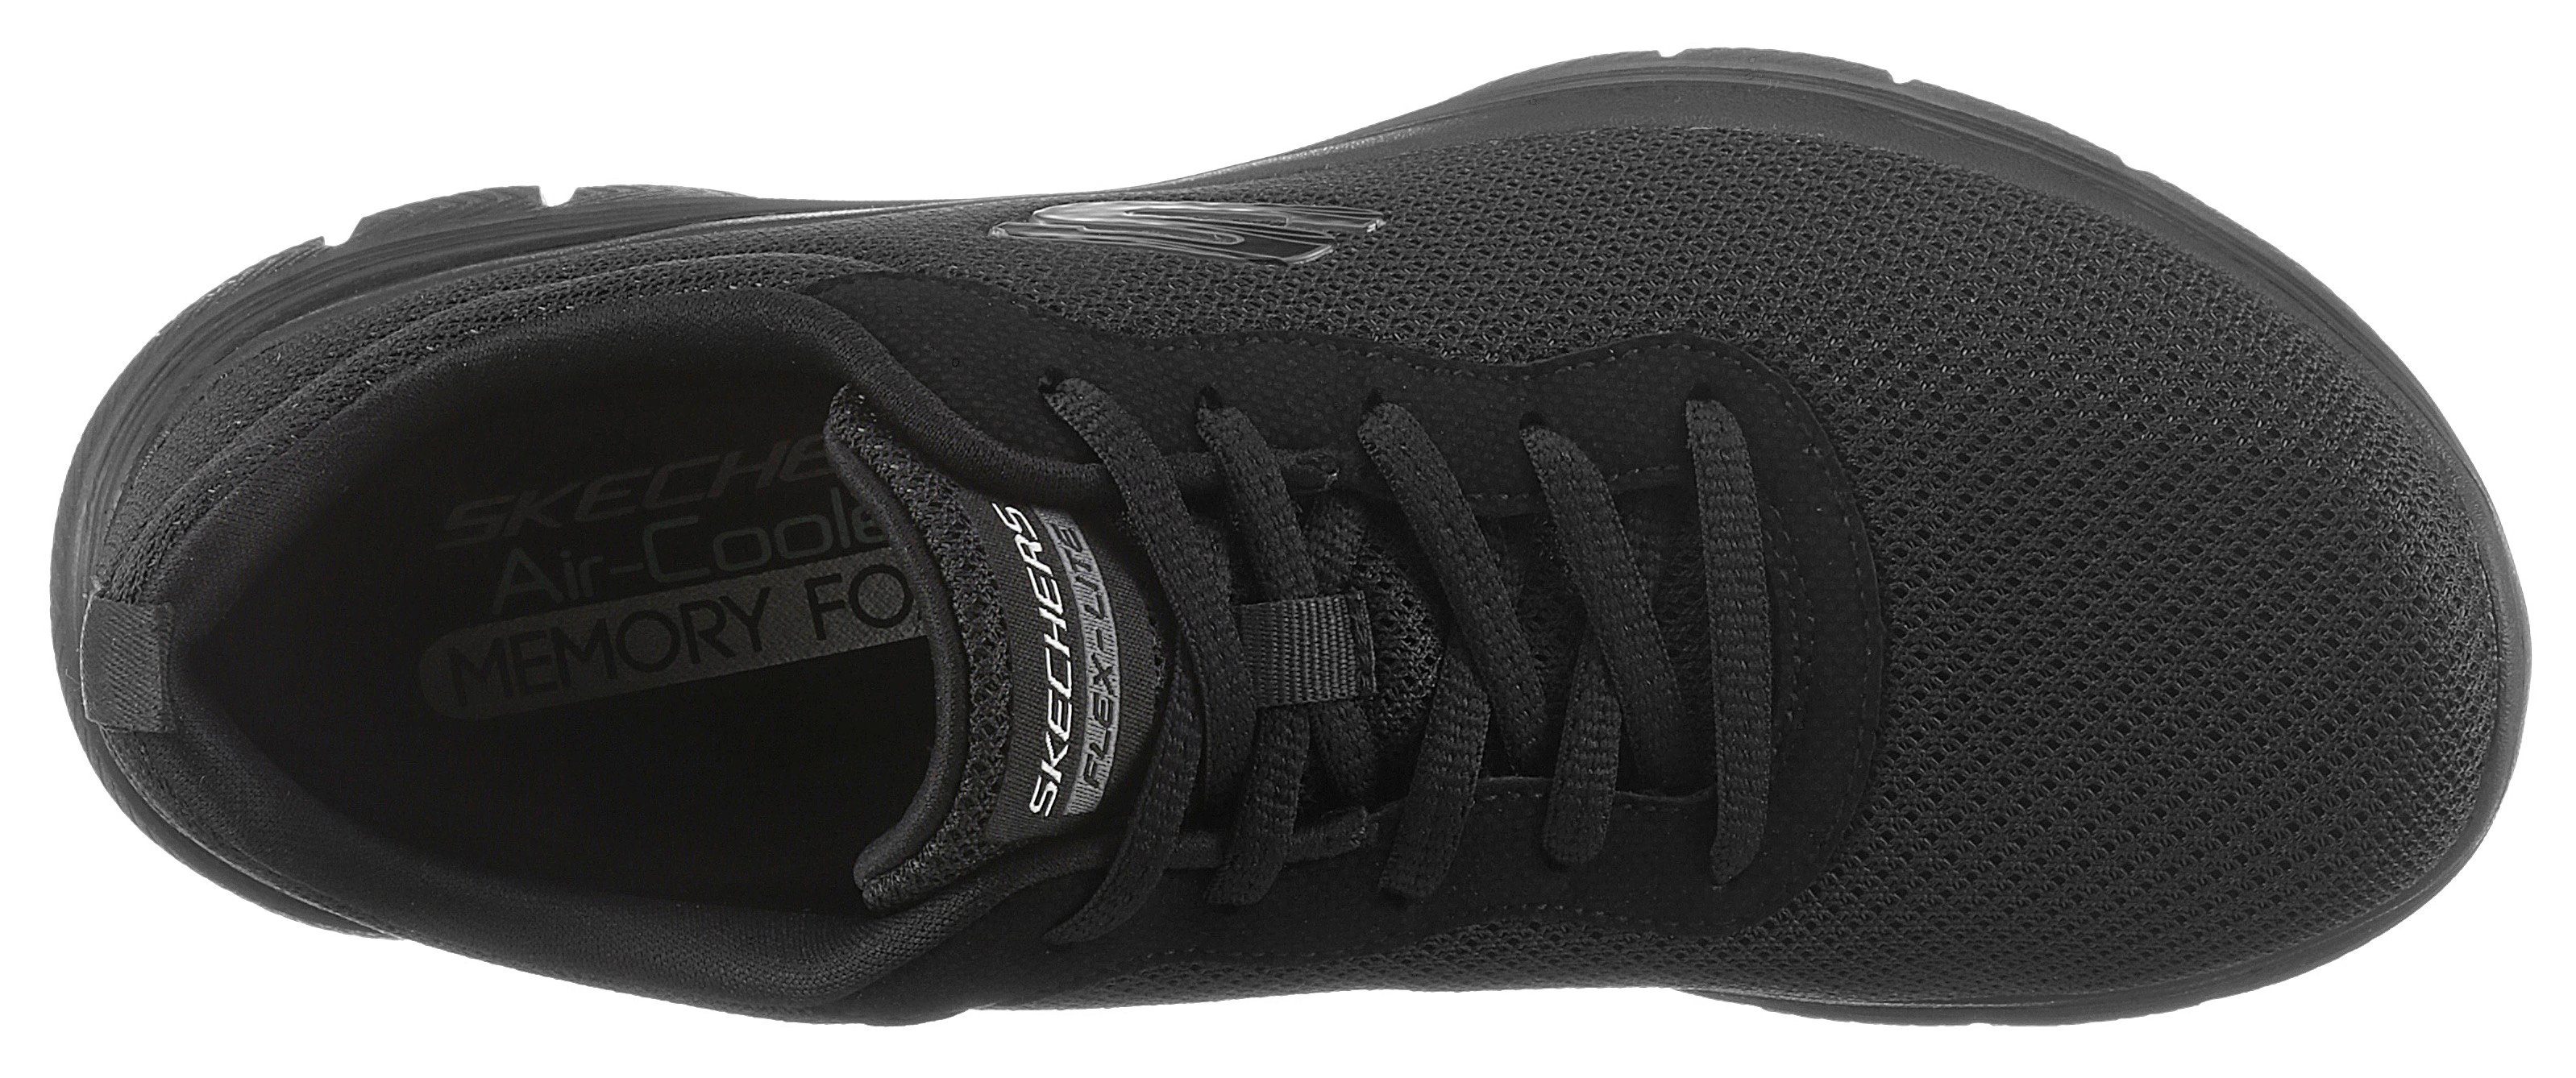 Sneaker mit Foam BRILLINAT schwarz VIEW FLEX Skechers Memory APPEAL Air-Cooled Ausstattung 4.0